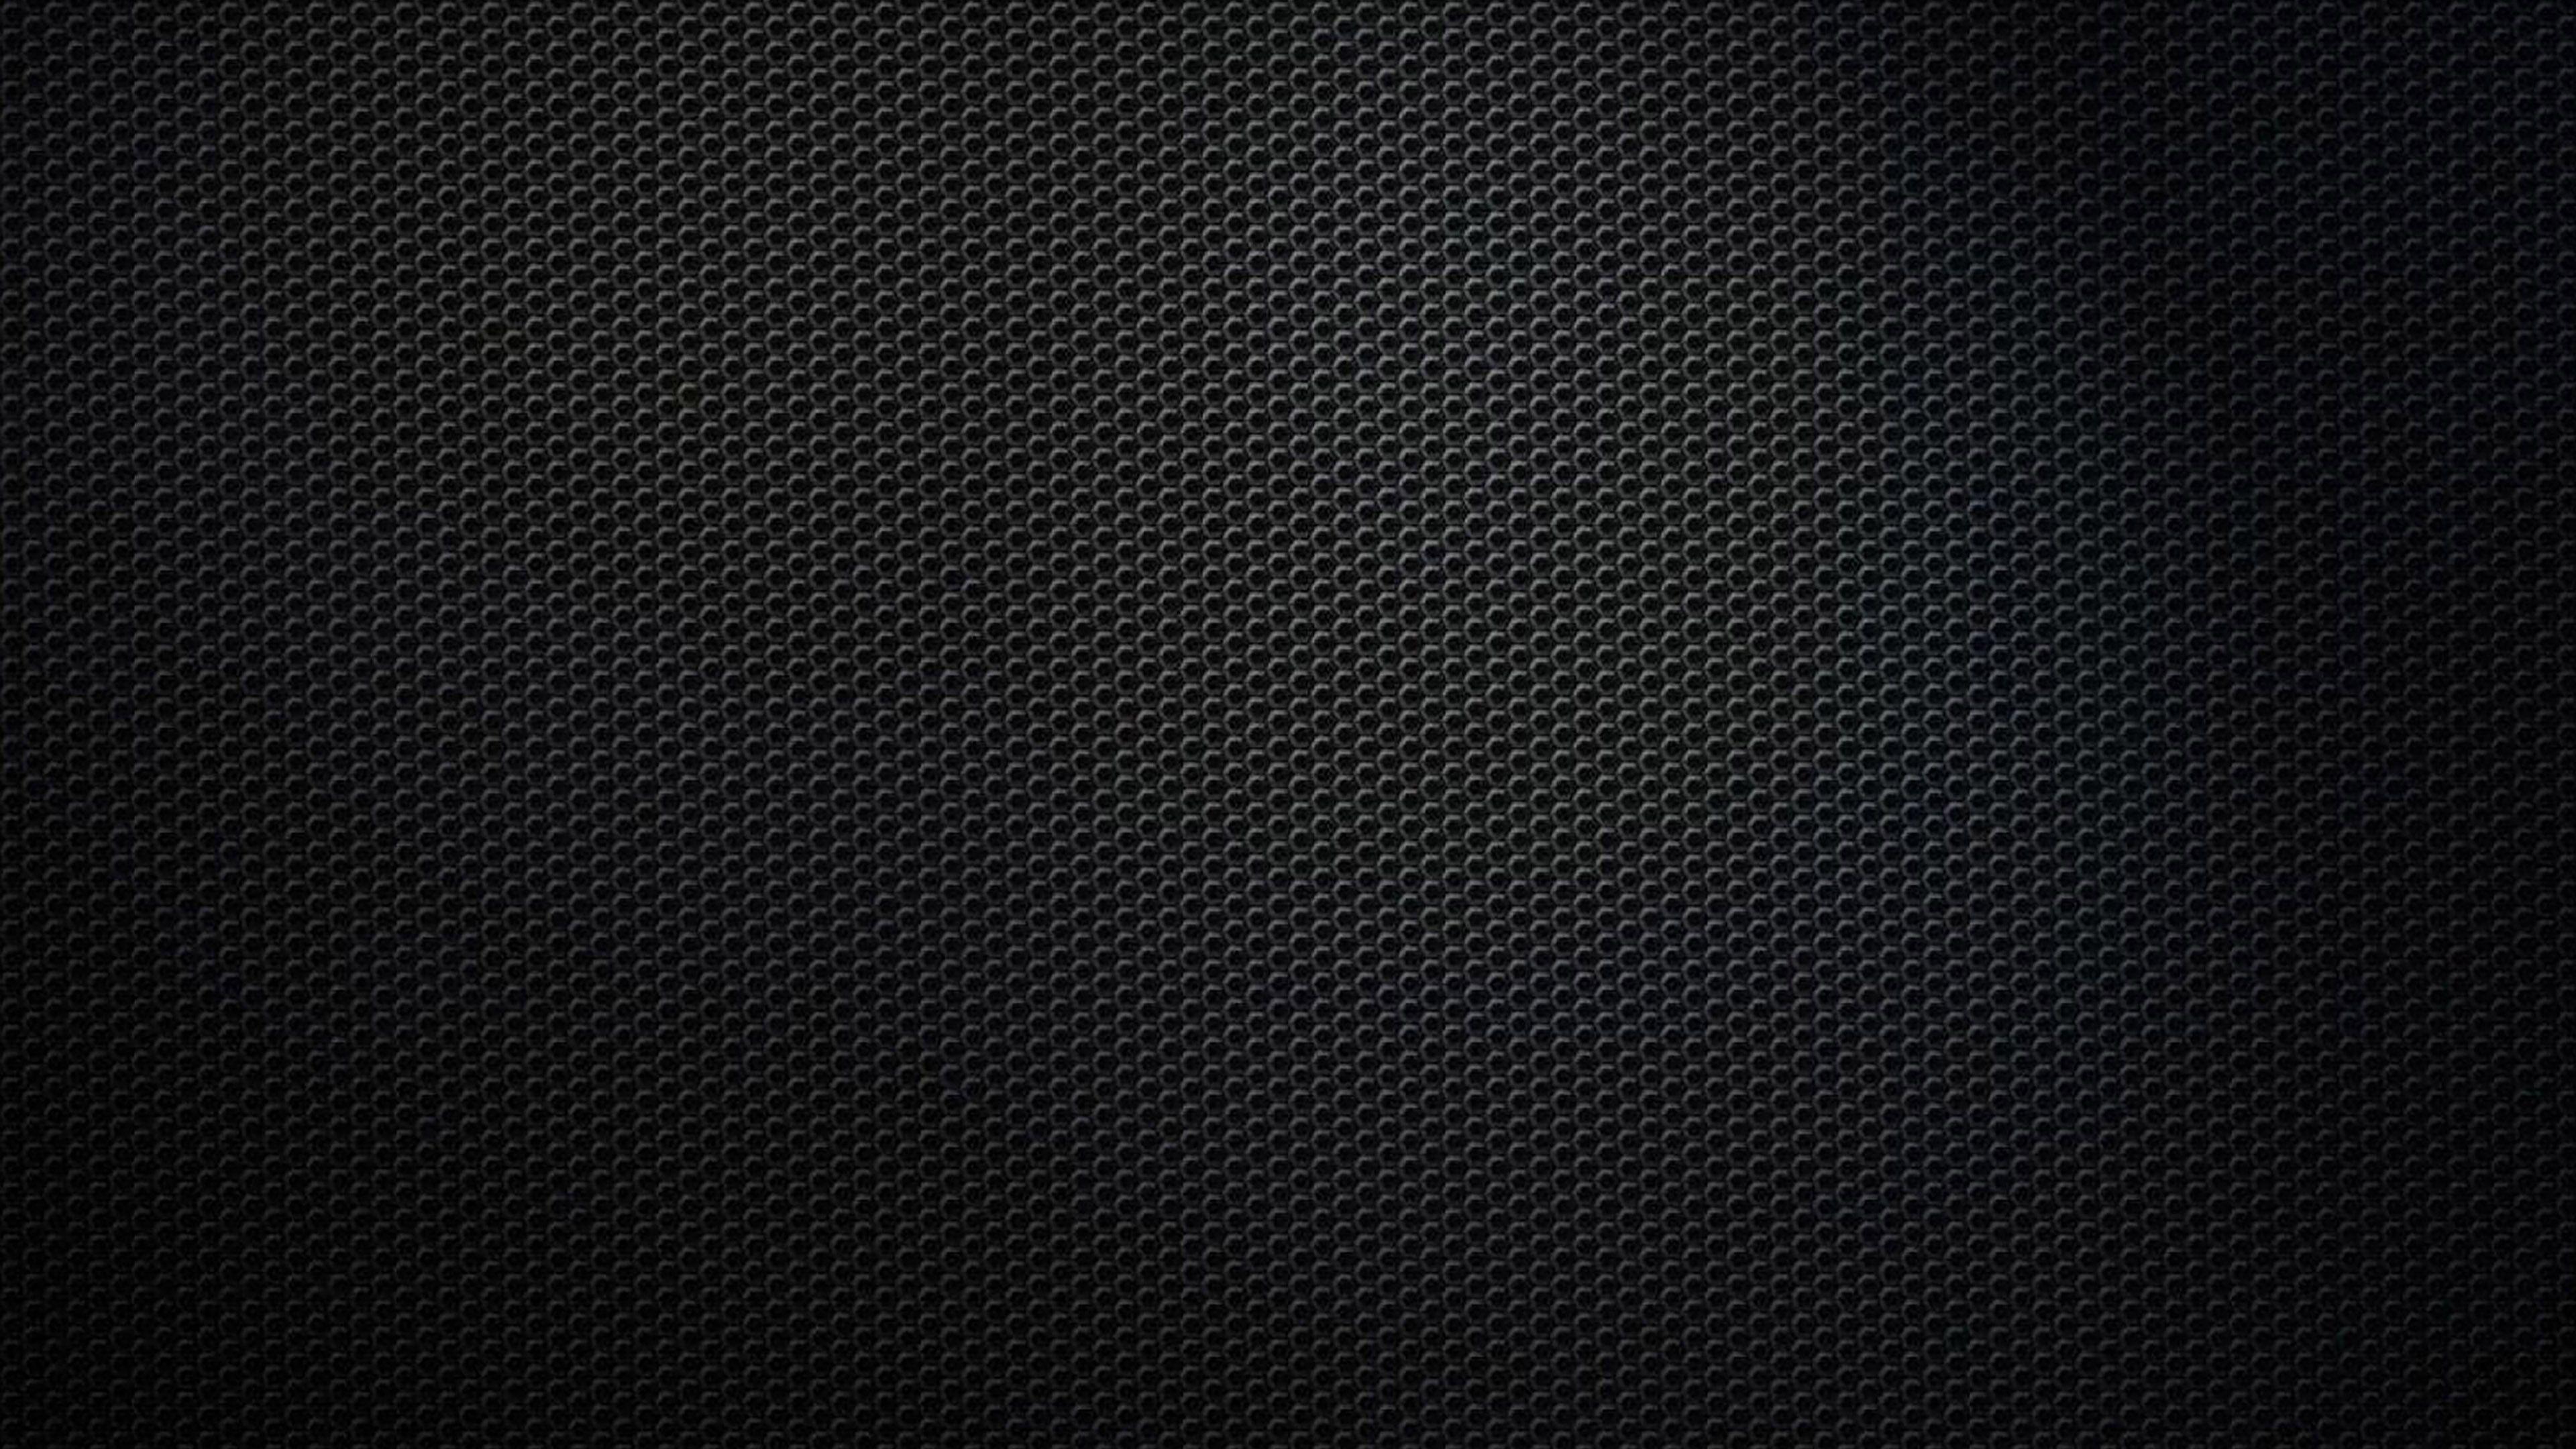 Black Carbon Wallpapers - Top Free Black Carbon Backgrounds